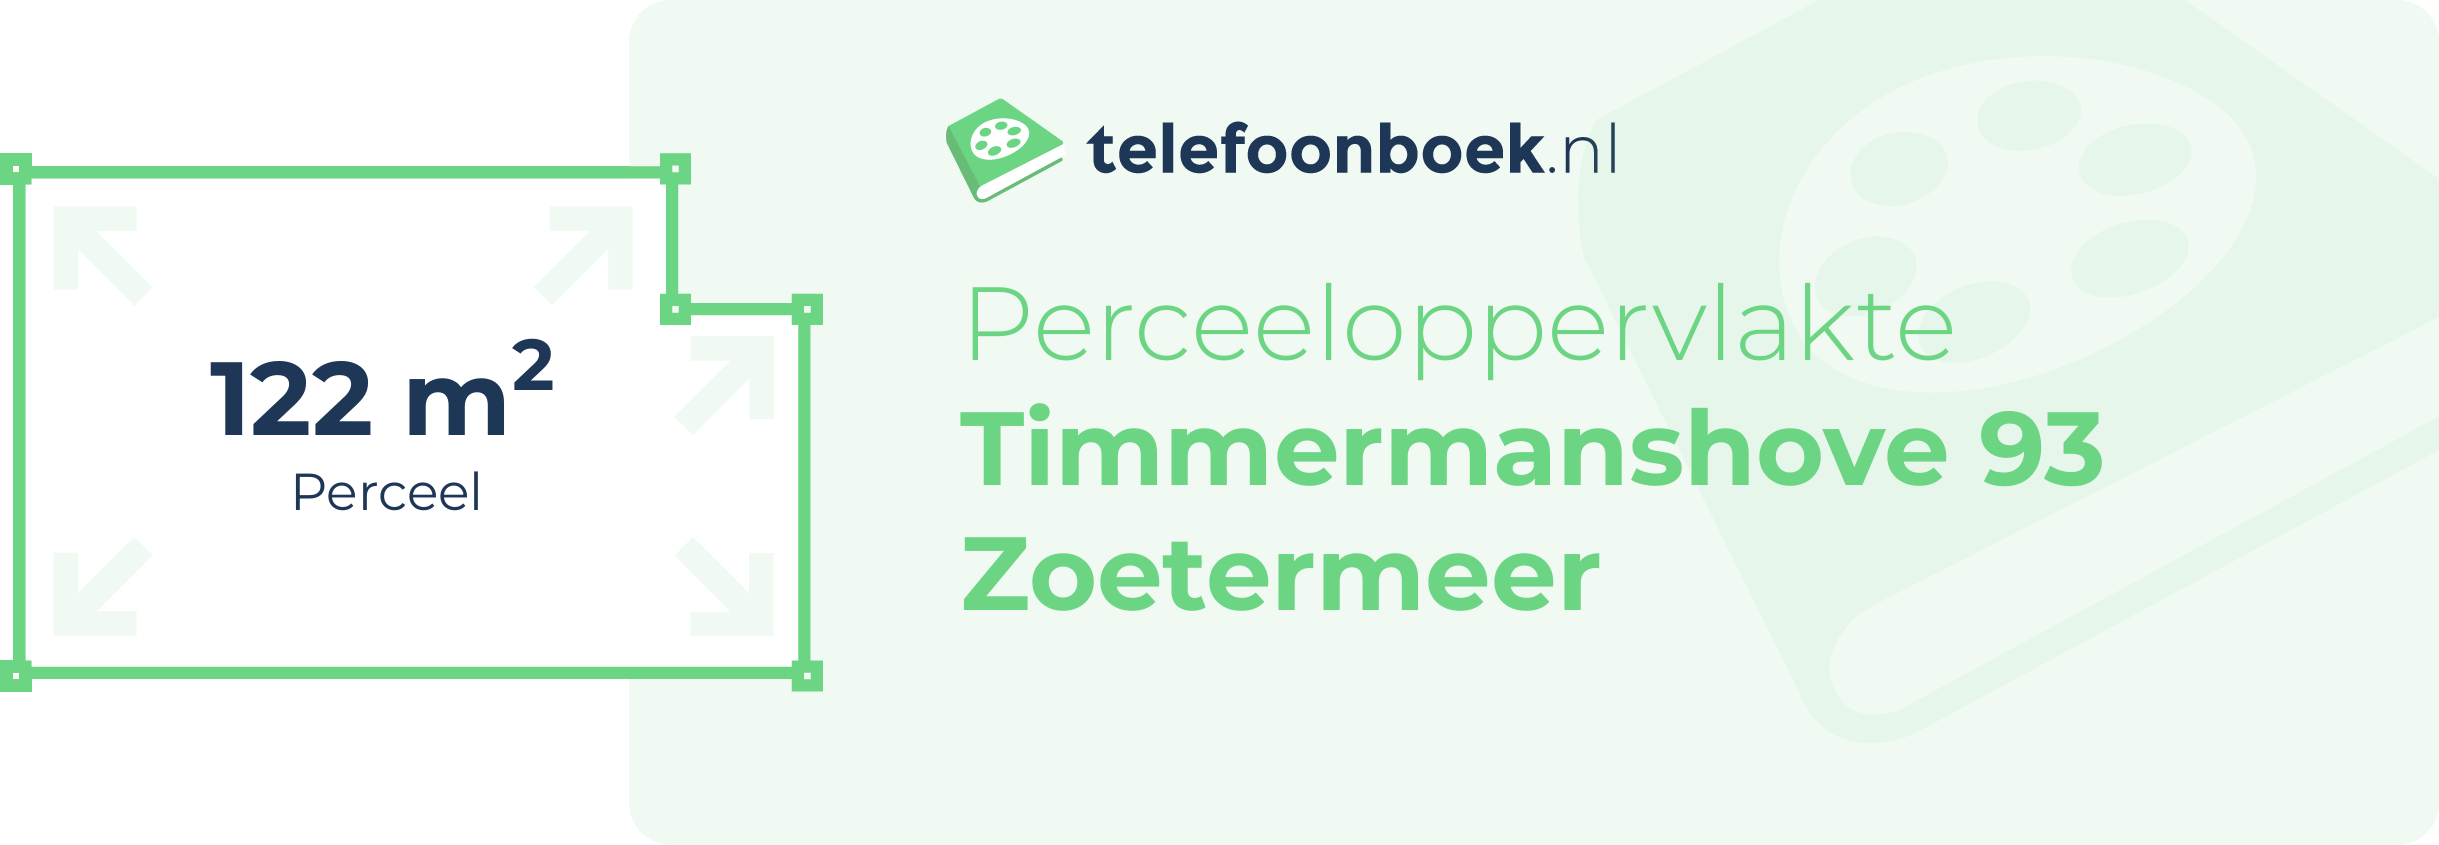 Perceeloppervlakte Timmermanshove 93 Zoetermeer